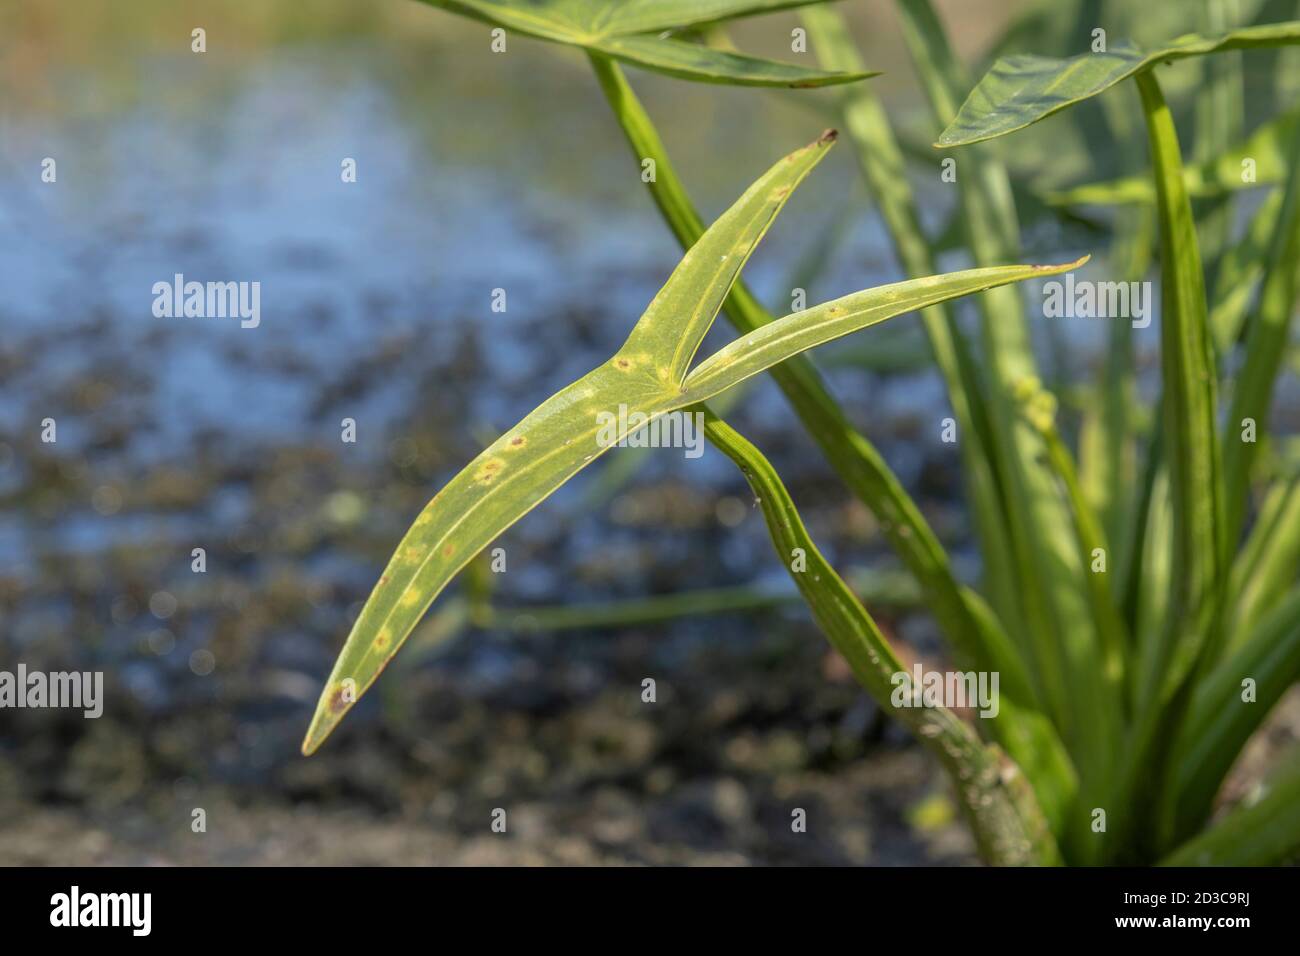 aquatic plant Arrowhead, arrowhead, duck potato, katniss or Omodaka (Sagittaria) Stock Photo